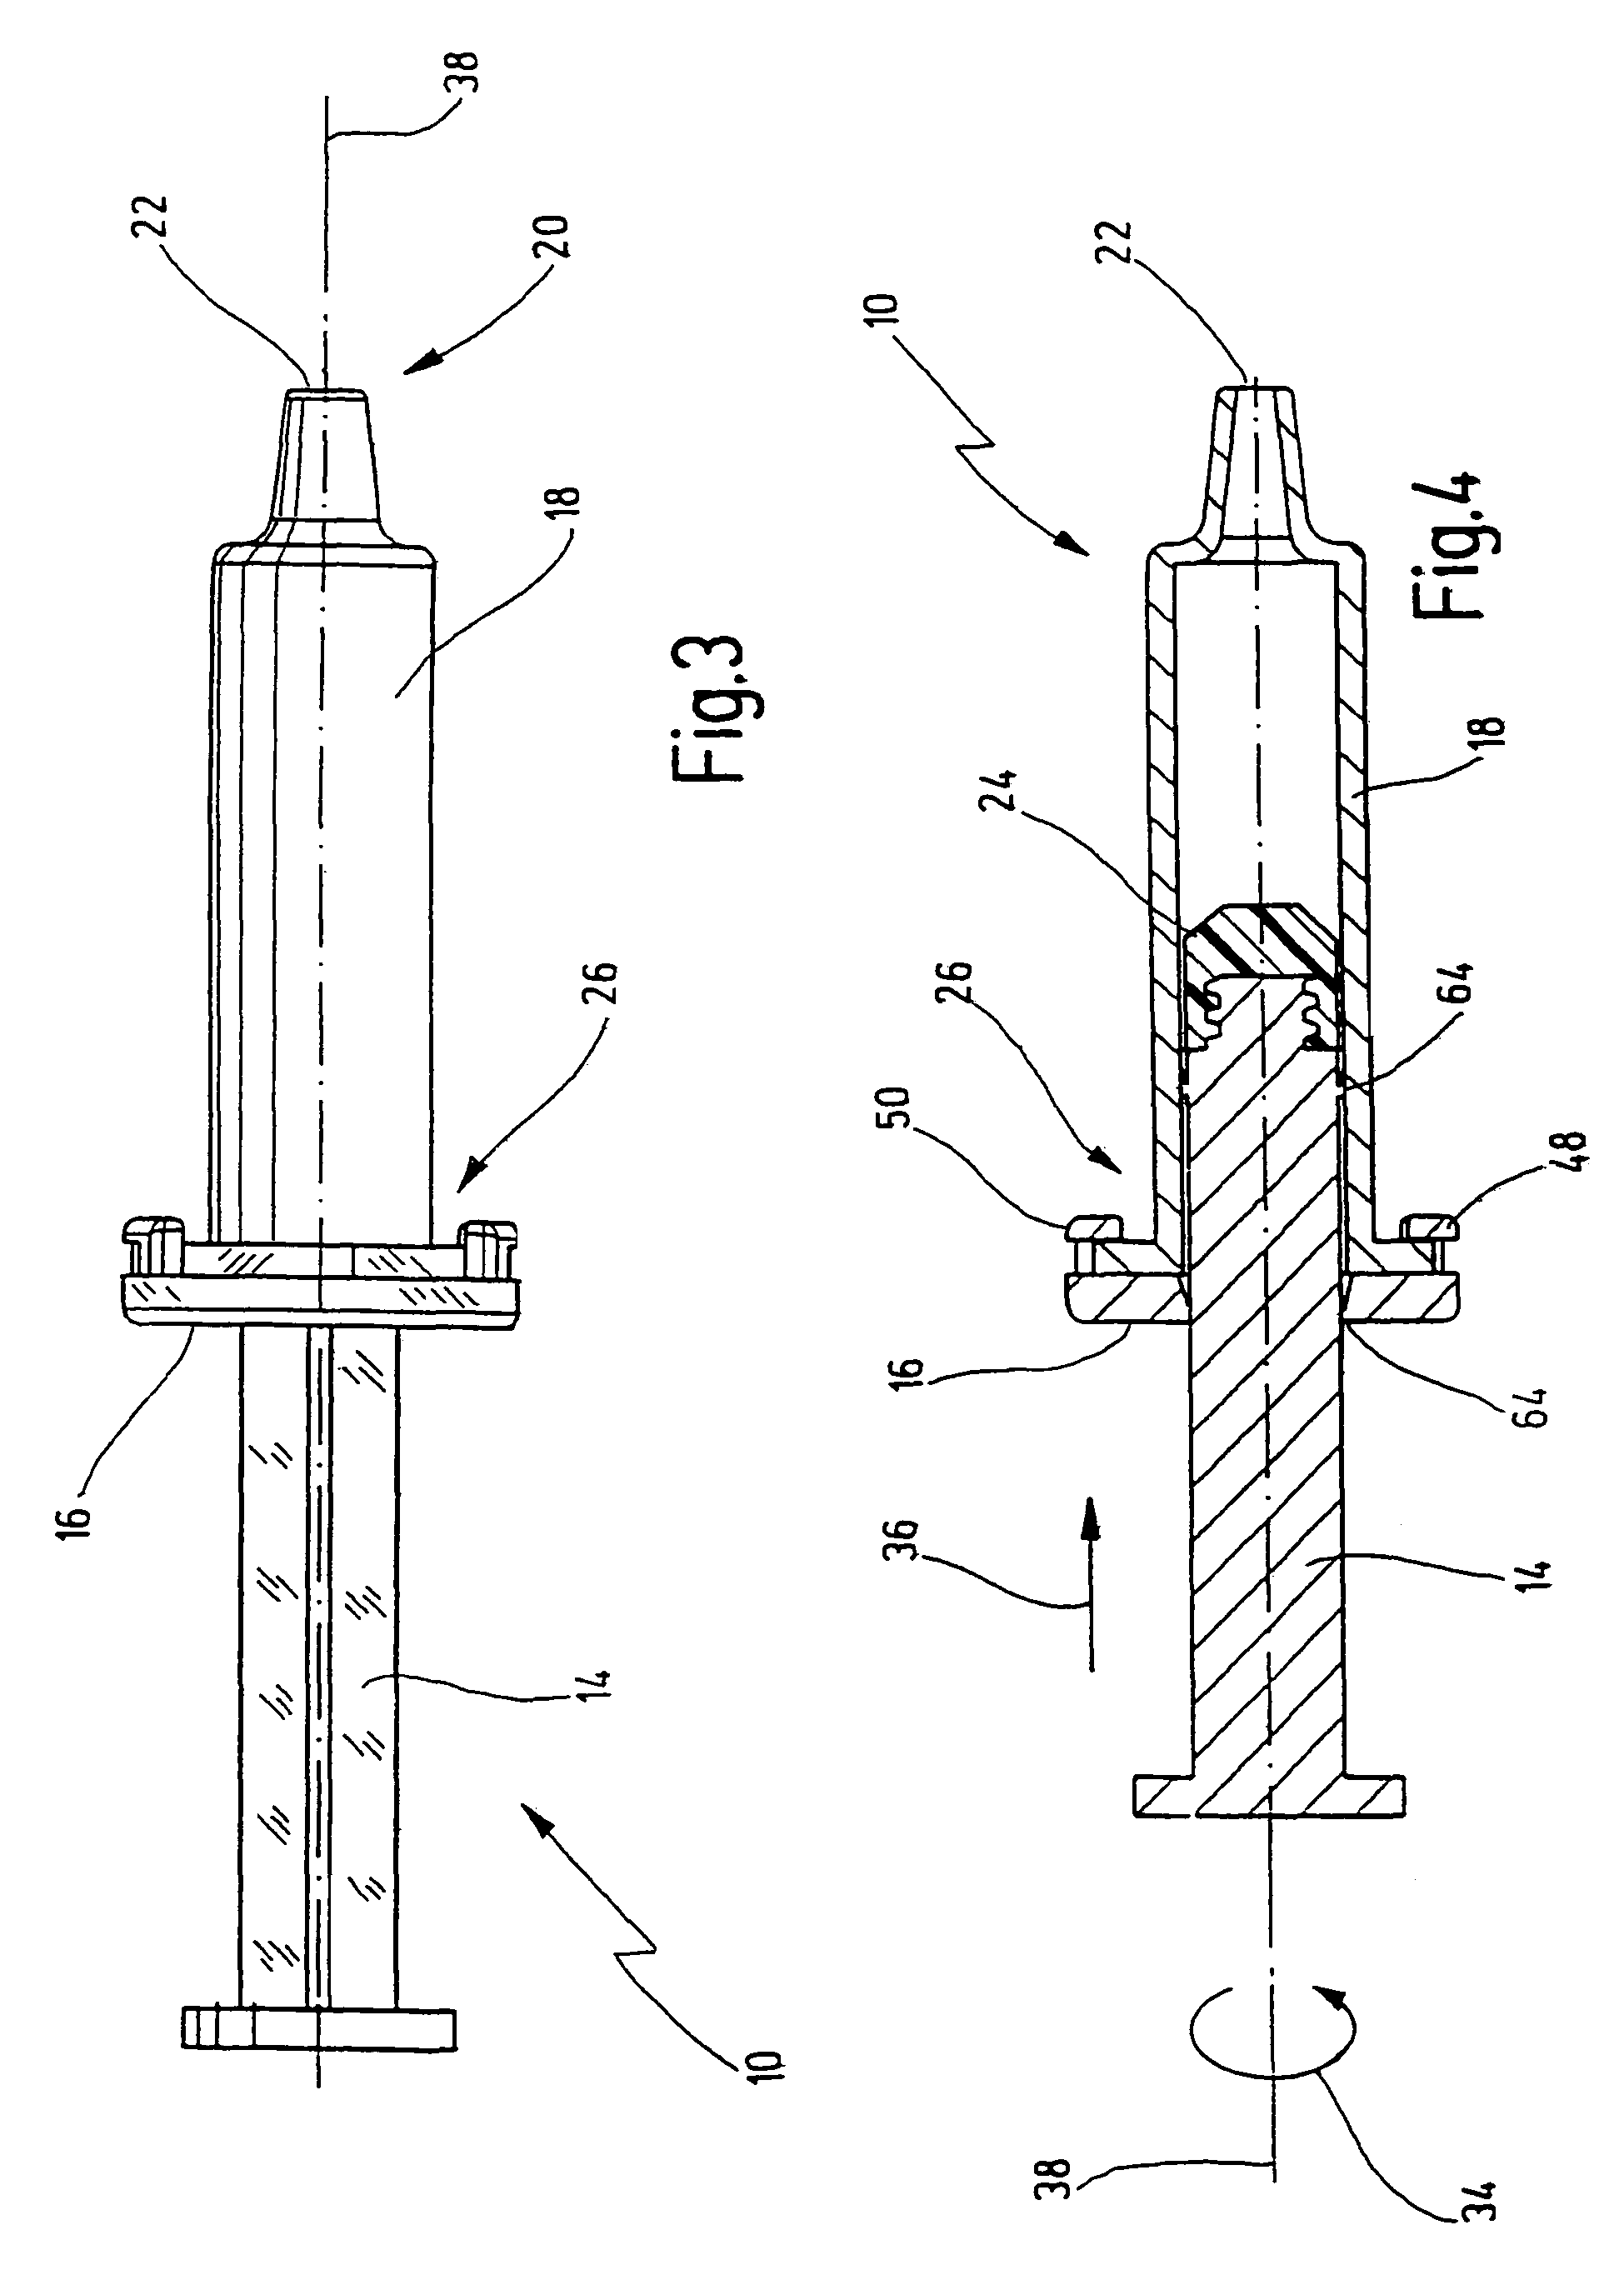 Method for manufacturing a syringe